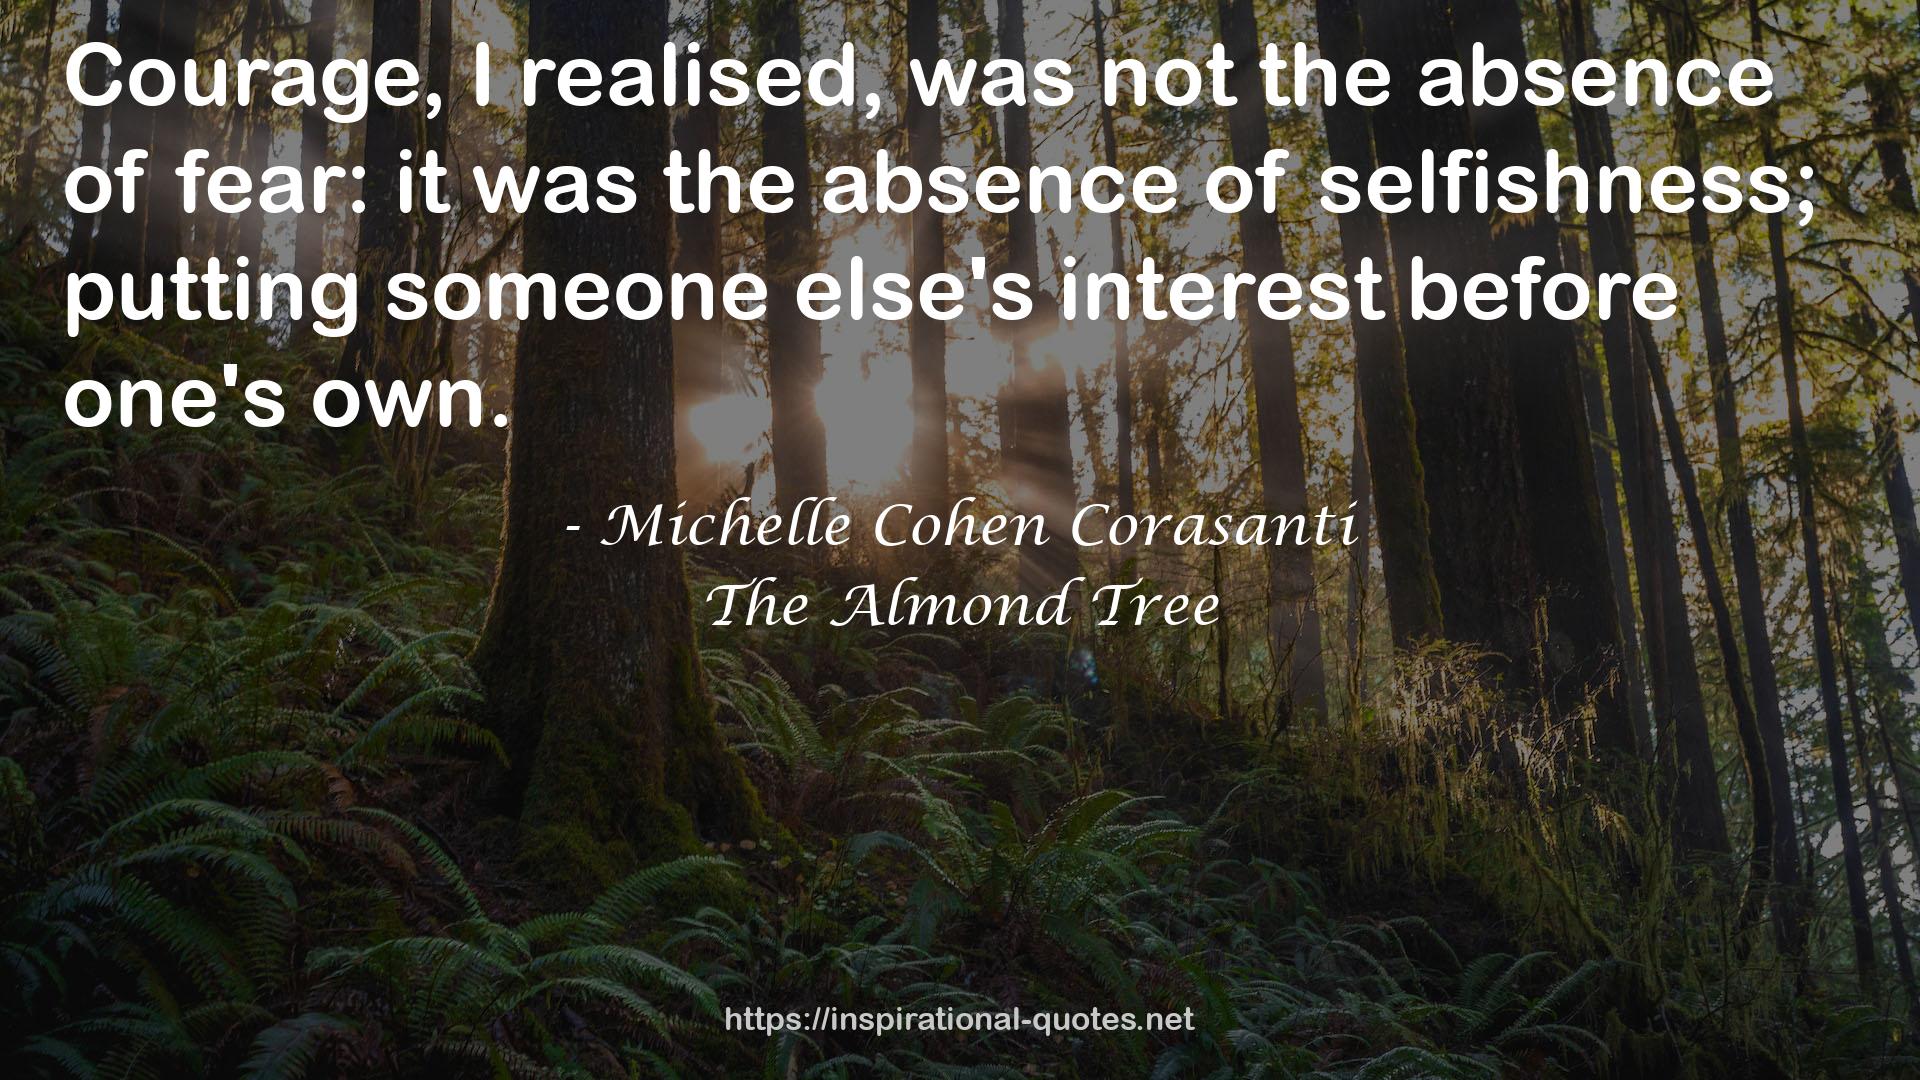 Michelle Cohen Corasanti QUOTES